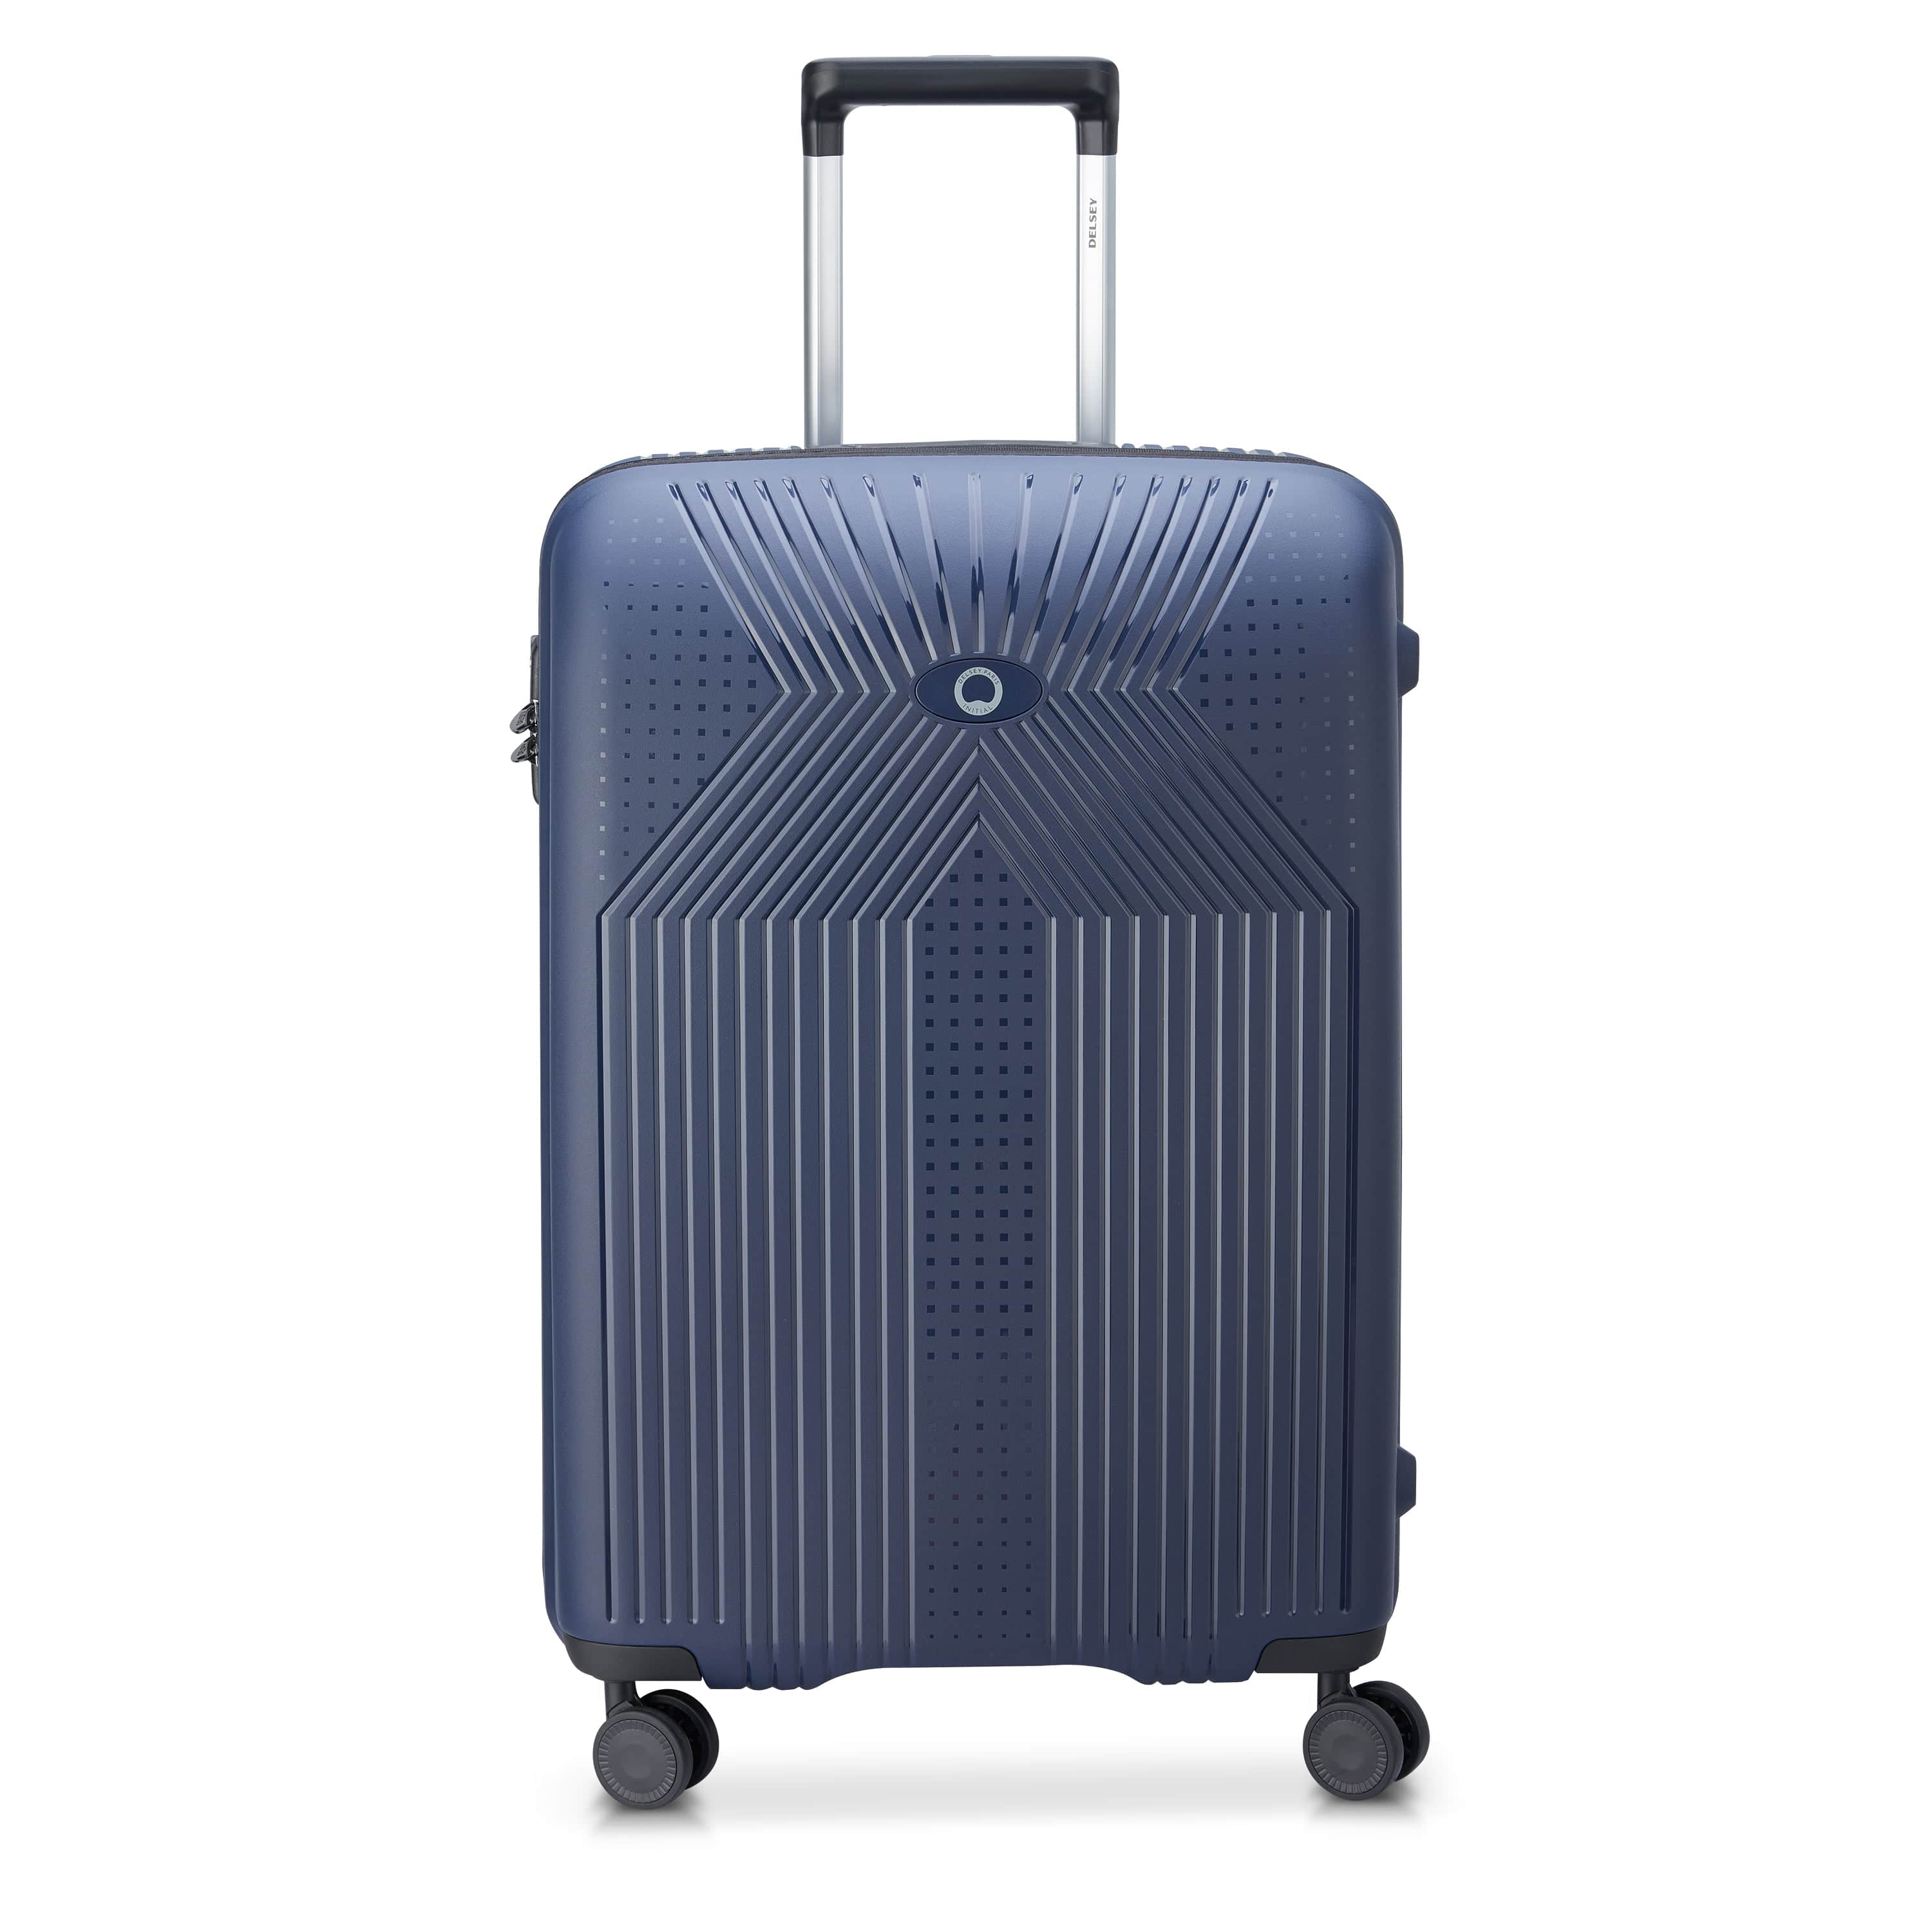 Delsey Ordener 66cm Hardcase 4 Double Wheel Check-In Luggage Trolley Blue - 00384681002